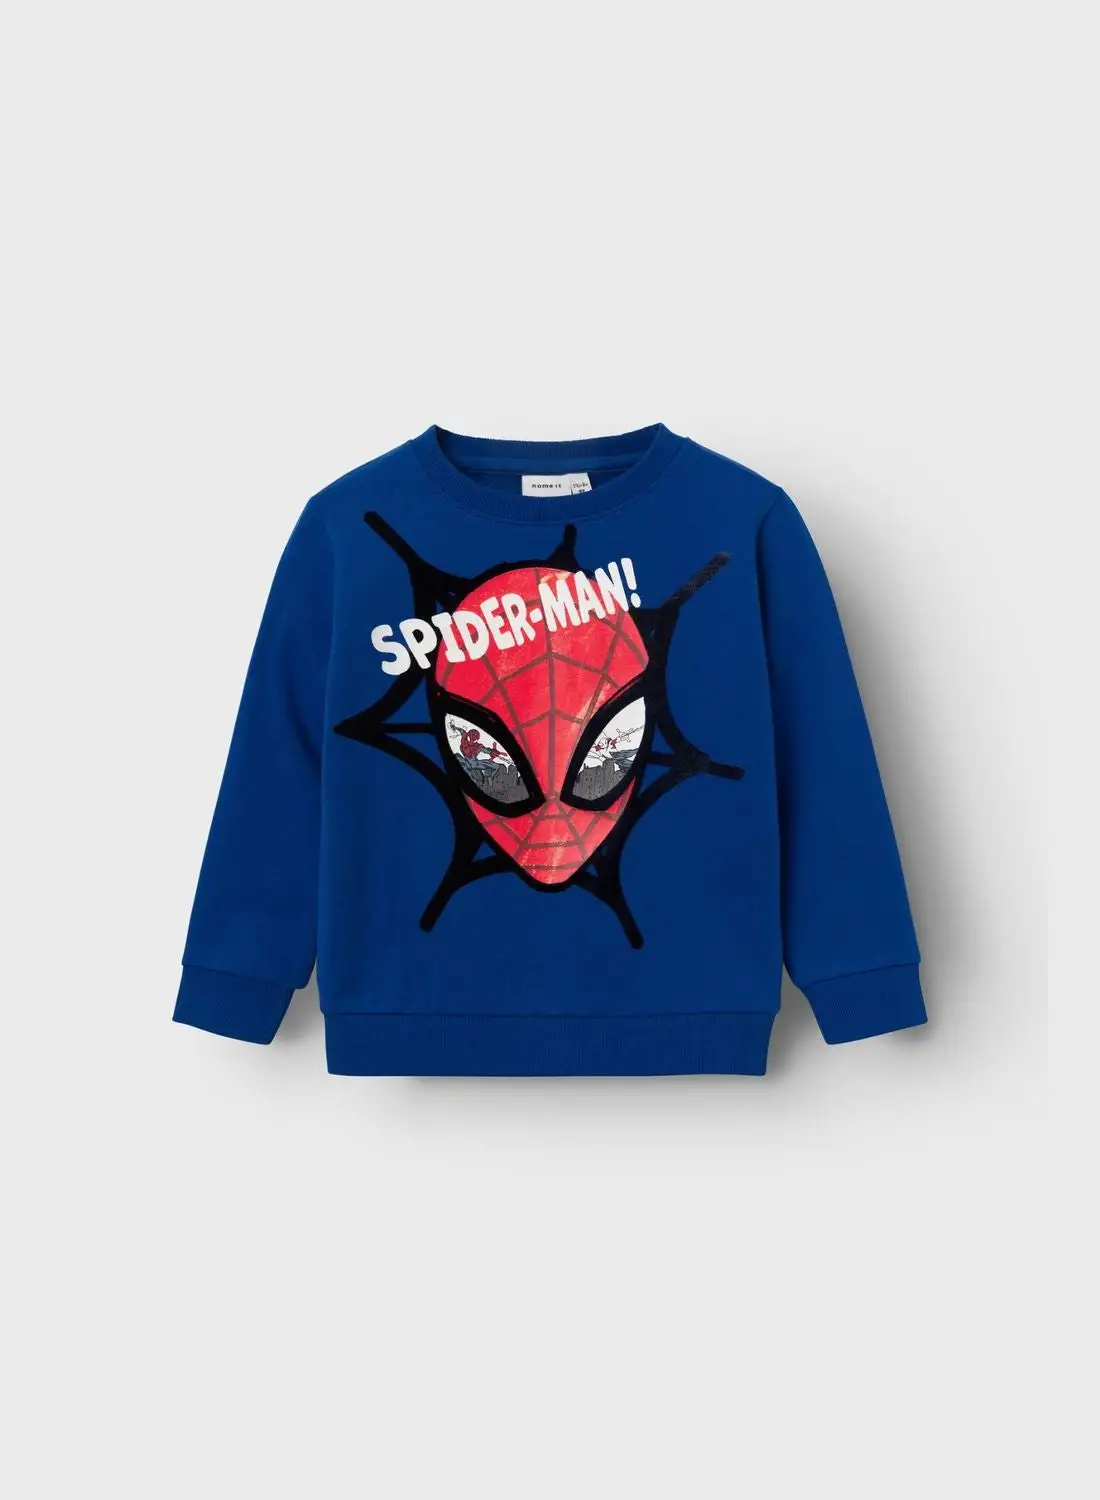 NAME IT Kids Spiderman Print Sweatshirt